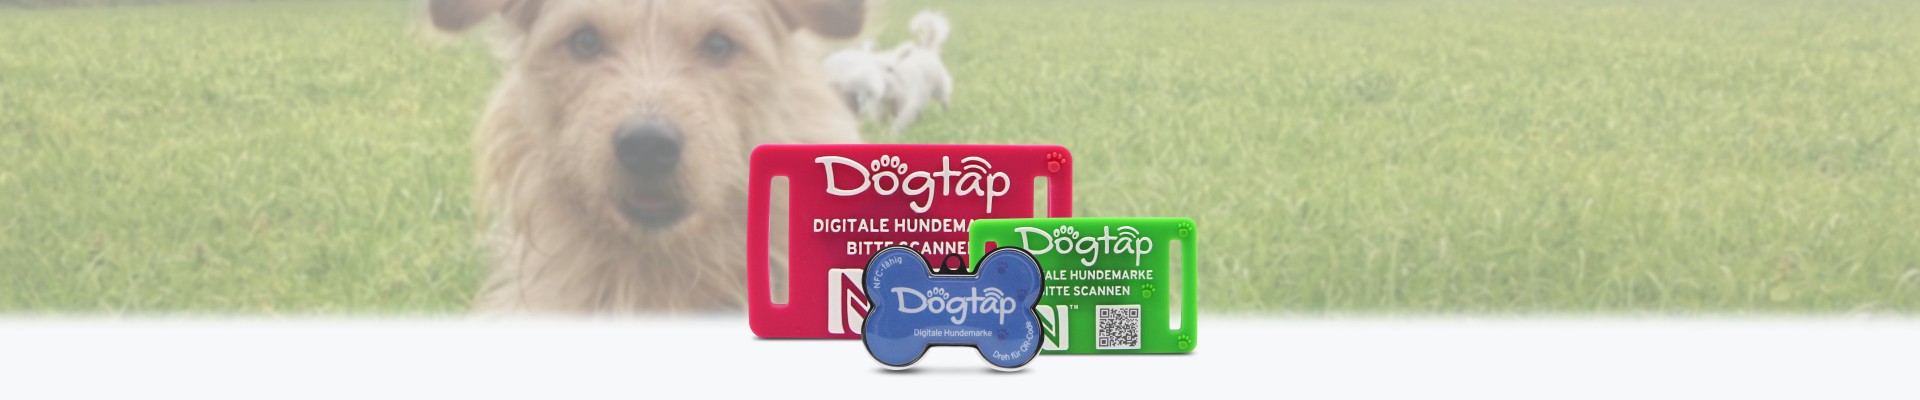 Dogtap - the digital dog tag